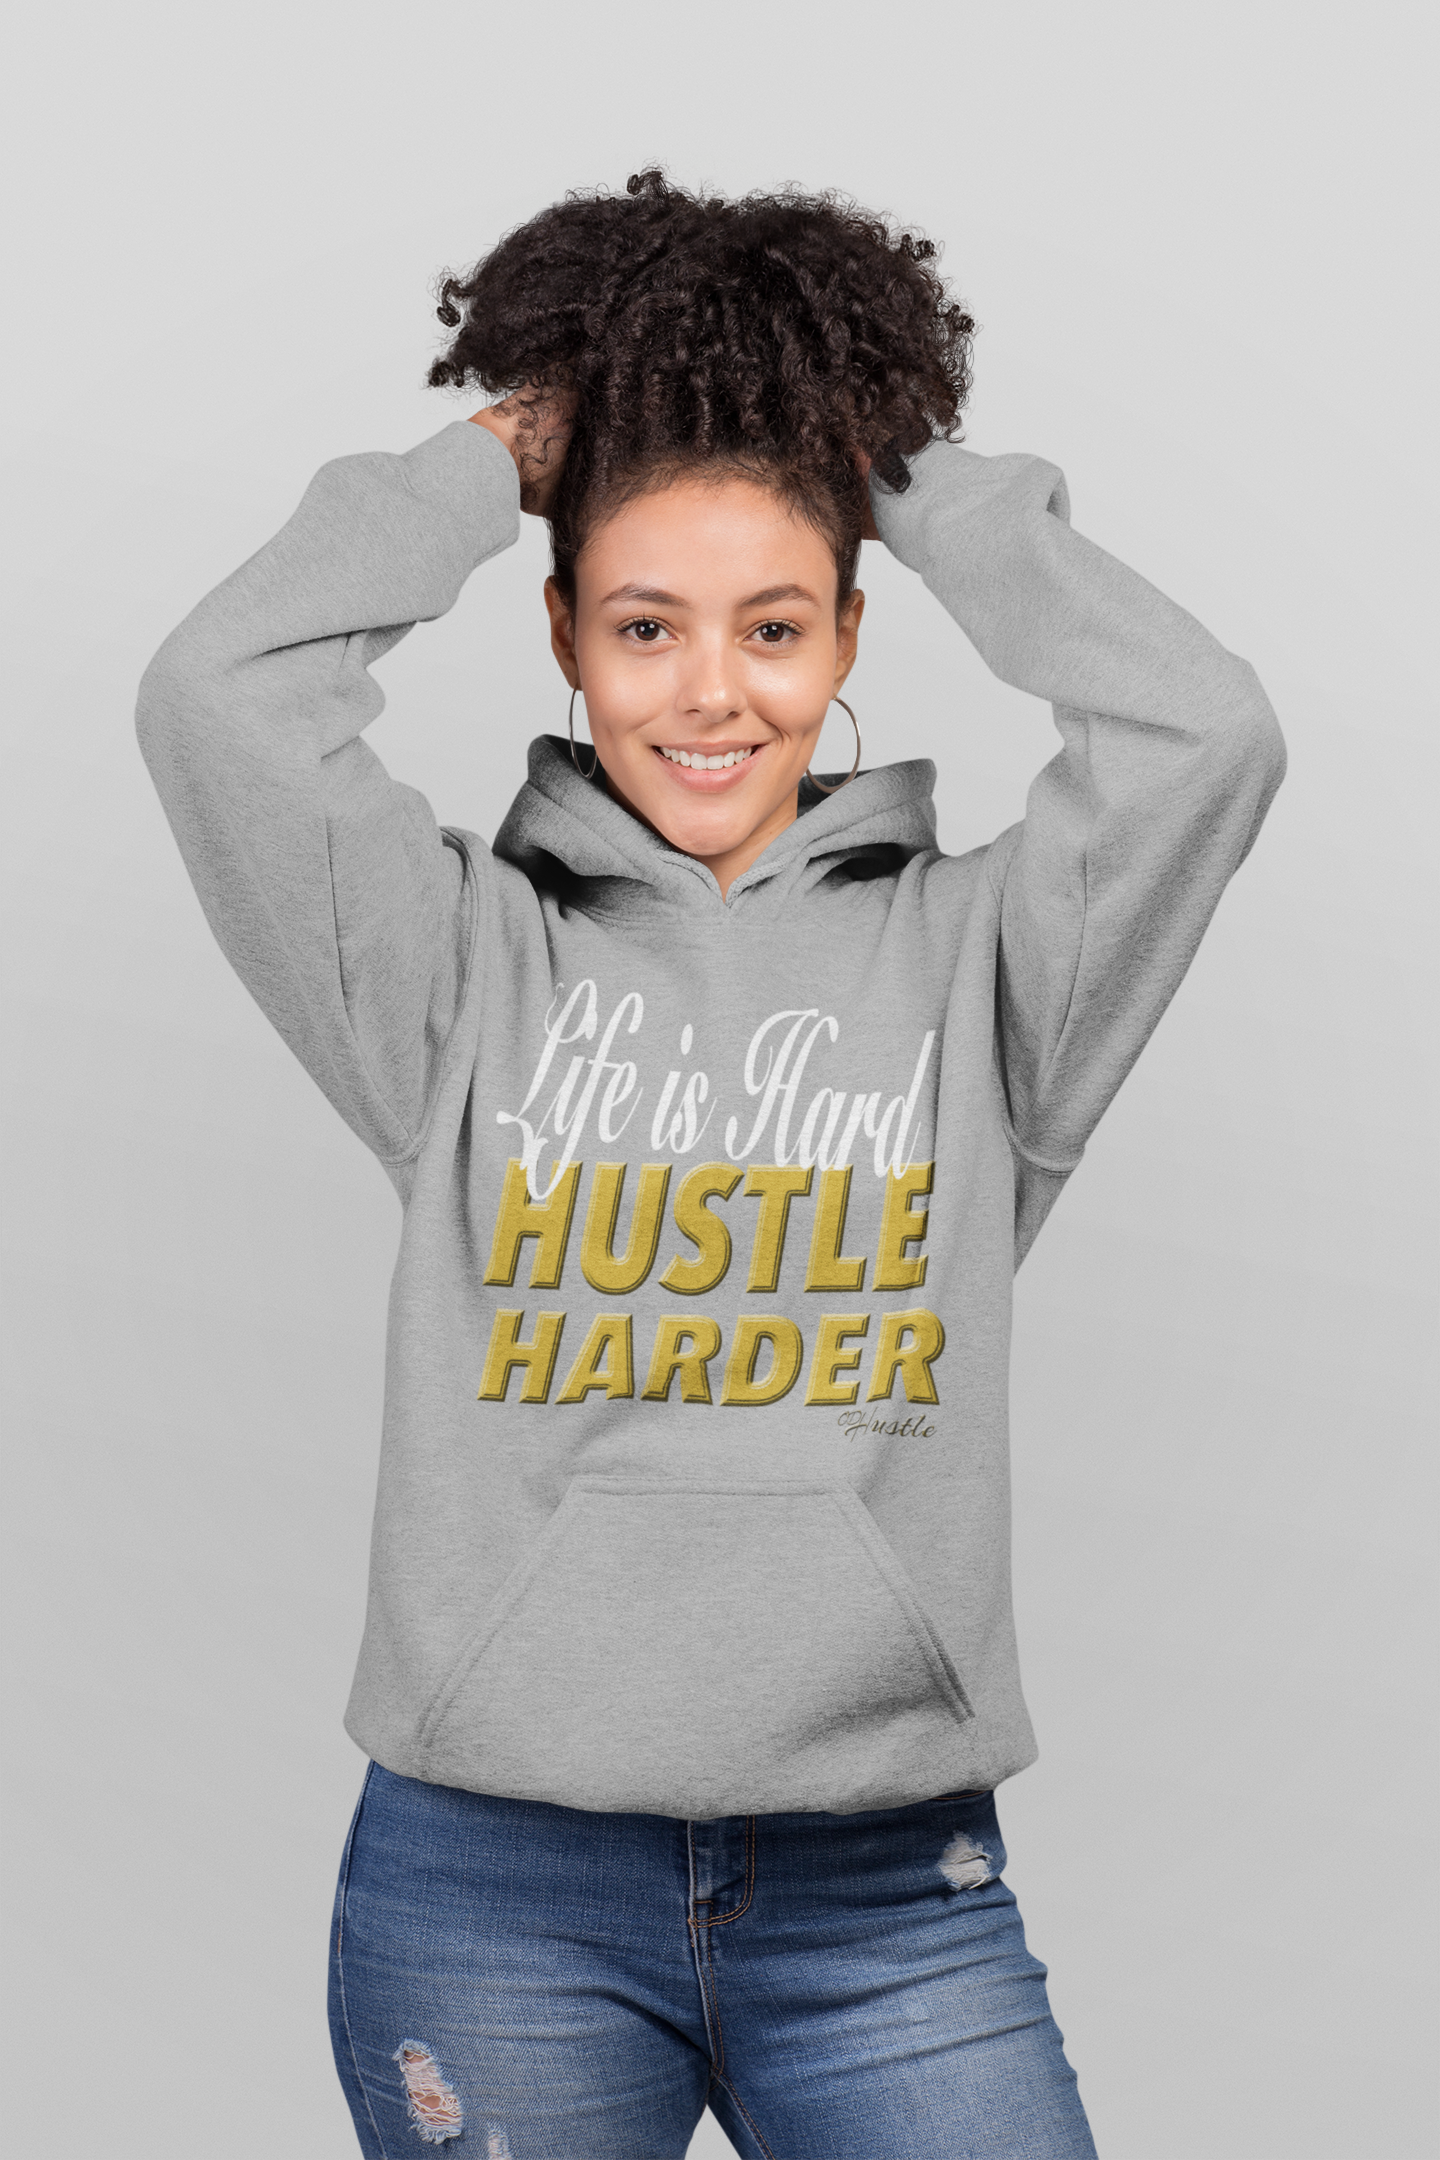 OD Hustle "Life Is Hard Hustle Harder" Hoodie Hooded Sweatshirt